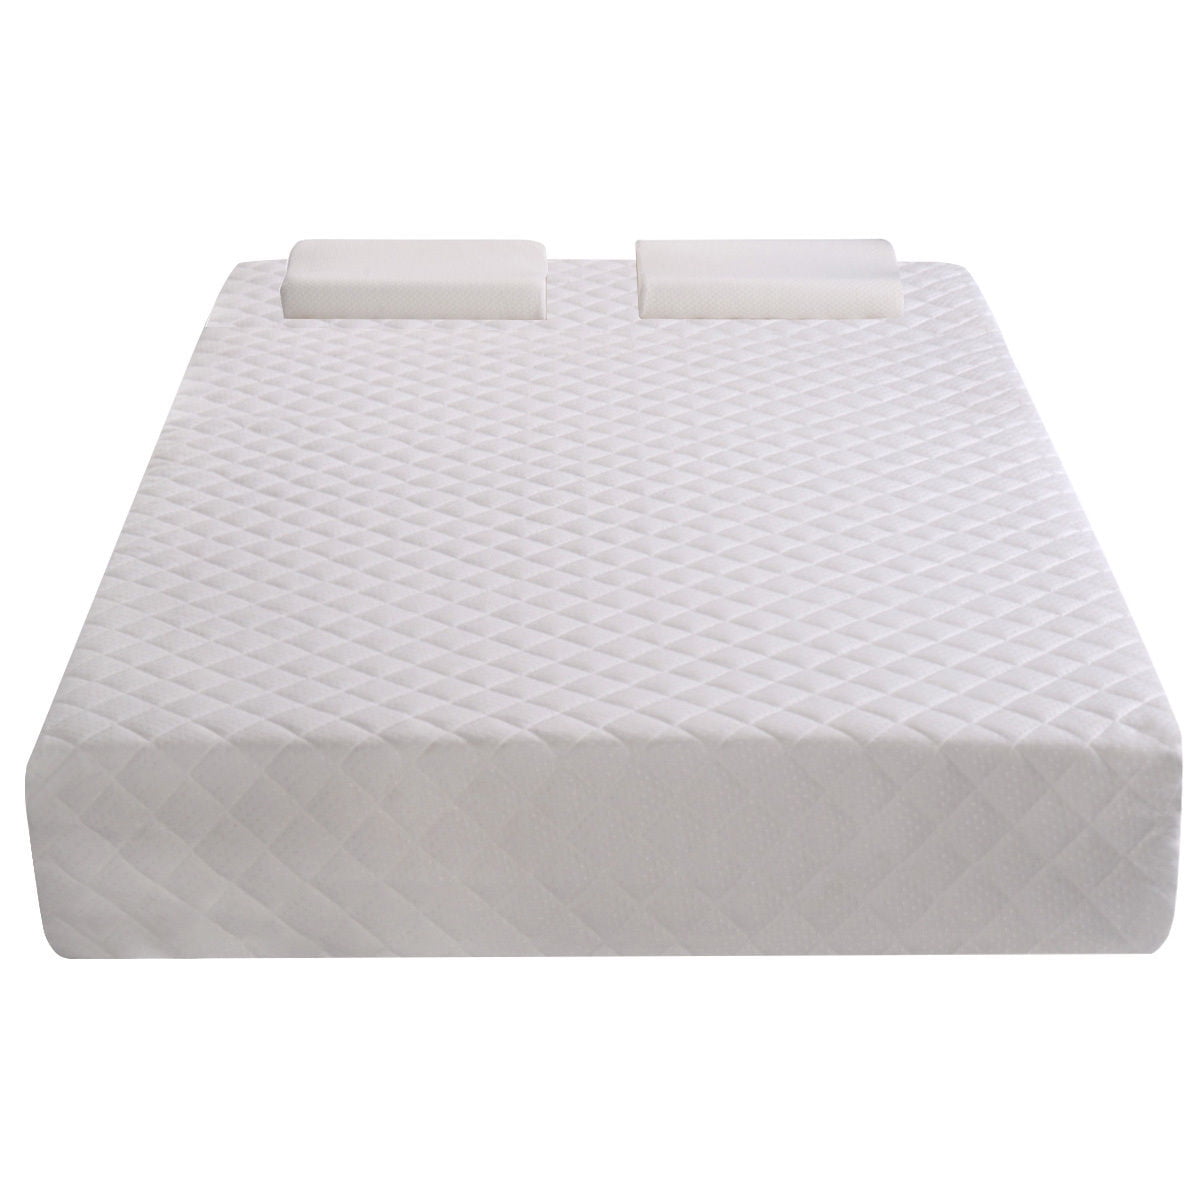 Queen Size 10" Memory Foam Mattress  Pad Bed Topper 2 FREE Pillows